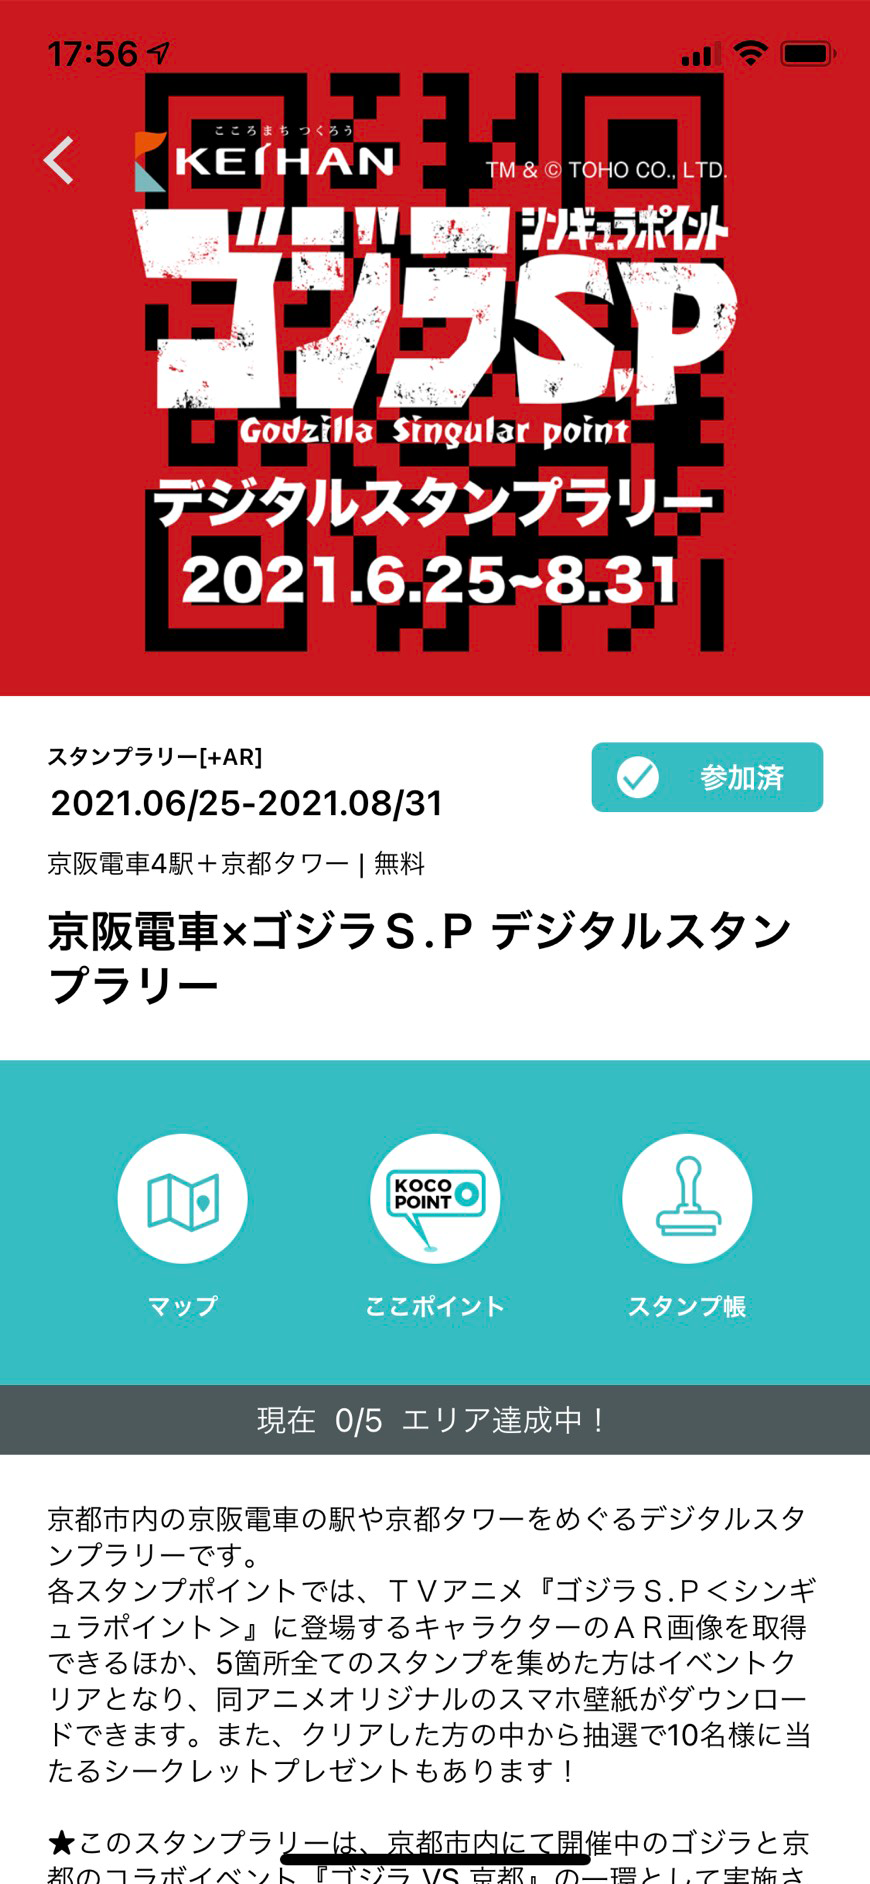 ｇｏｄｚｉｌｌａ上洛 ゴジラ Vs 京都 京都をめぐるデジタルスタンプラリー 京阪電車 ゴジラｓ ｐ デジタルスタンプラリー を6月25日 金 より実施します 21年6月22日 エキサイトニュース